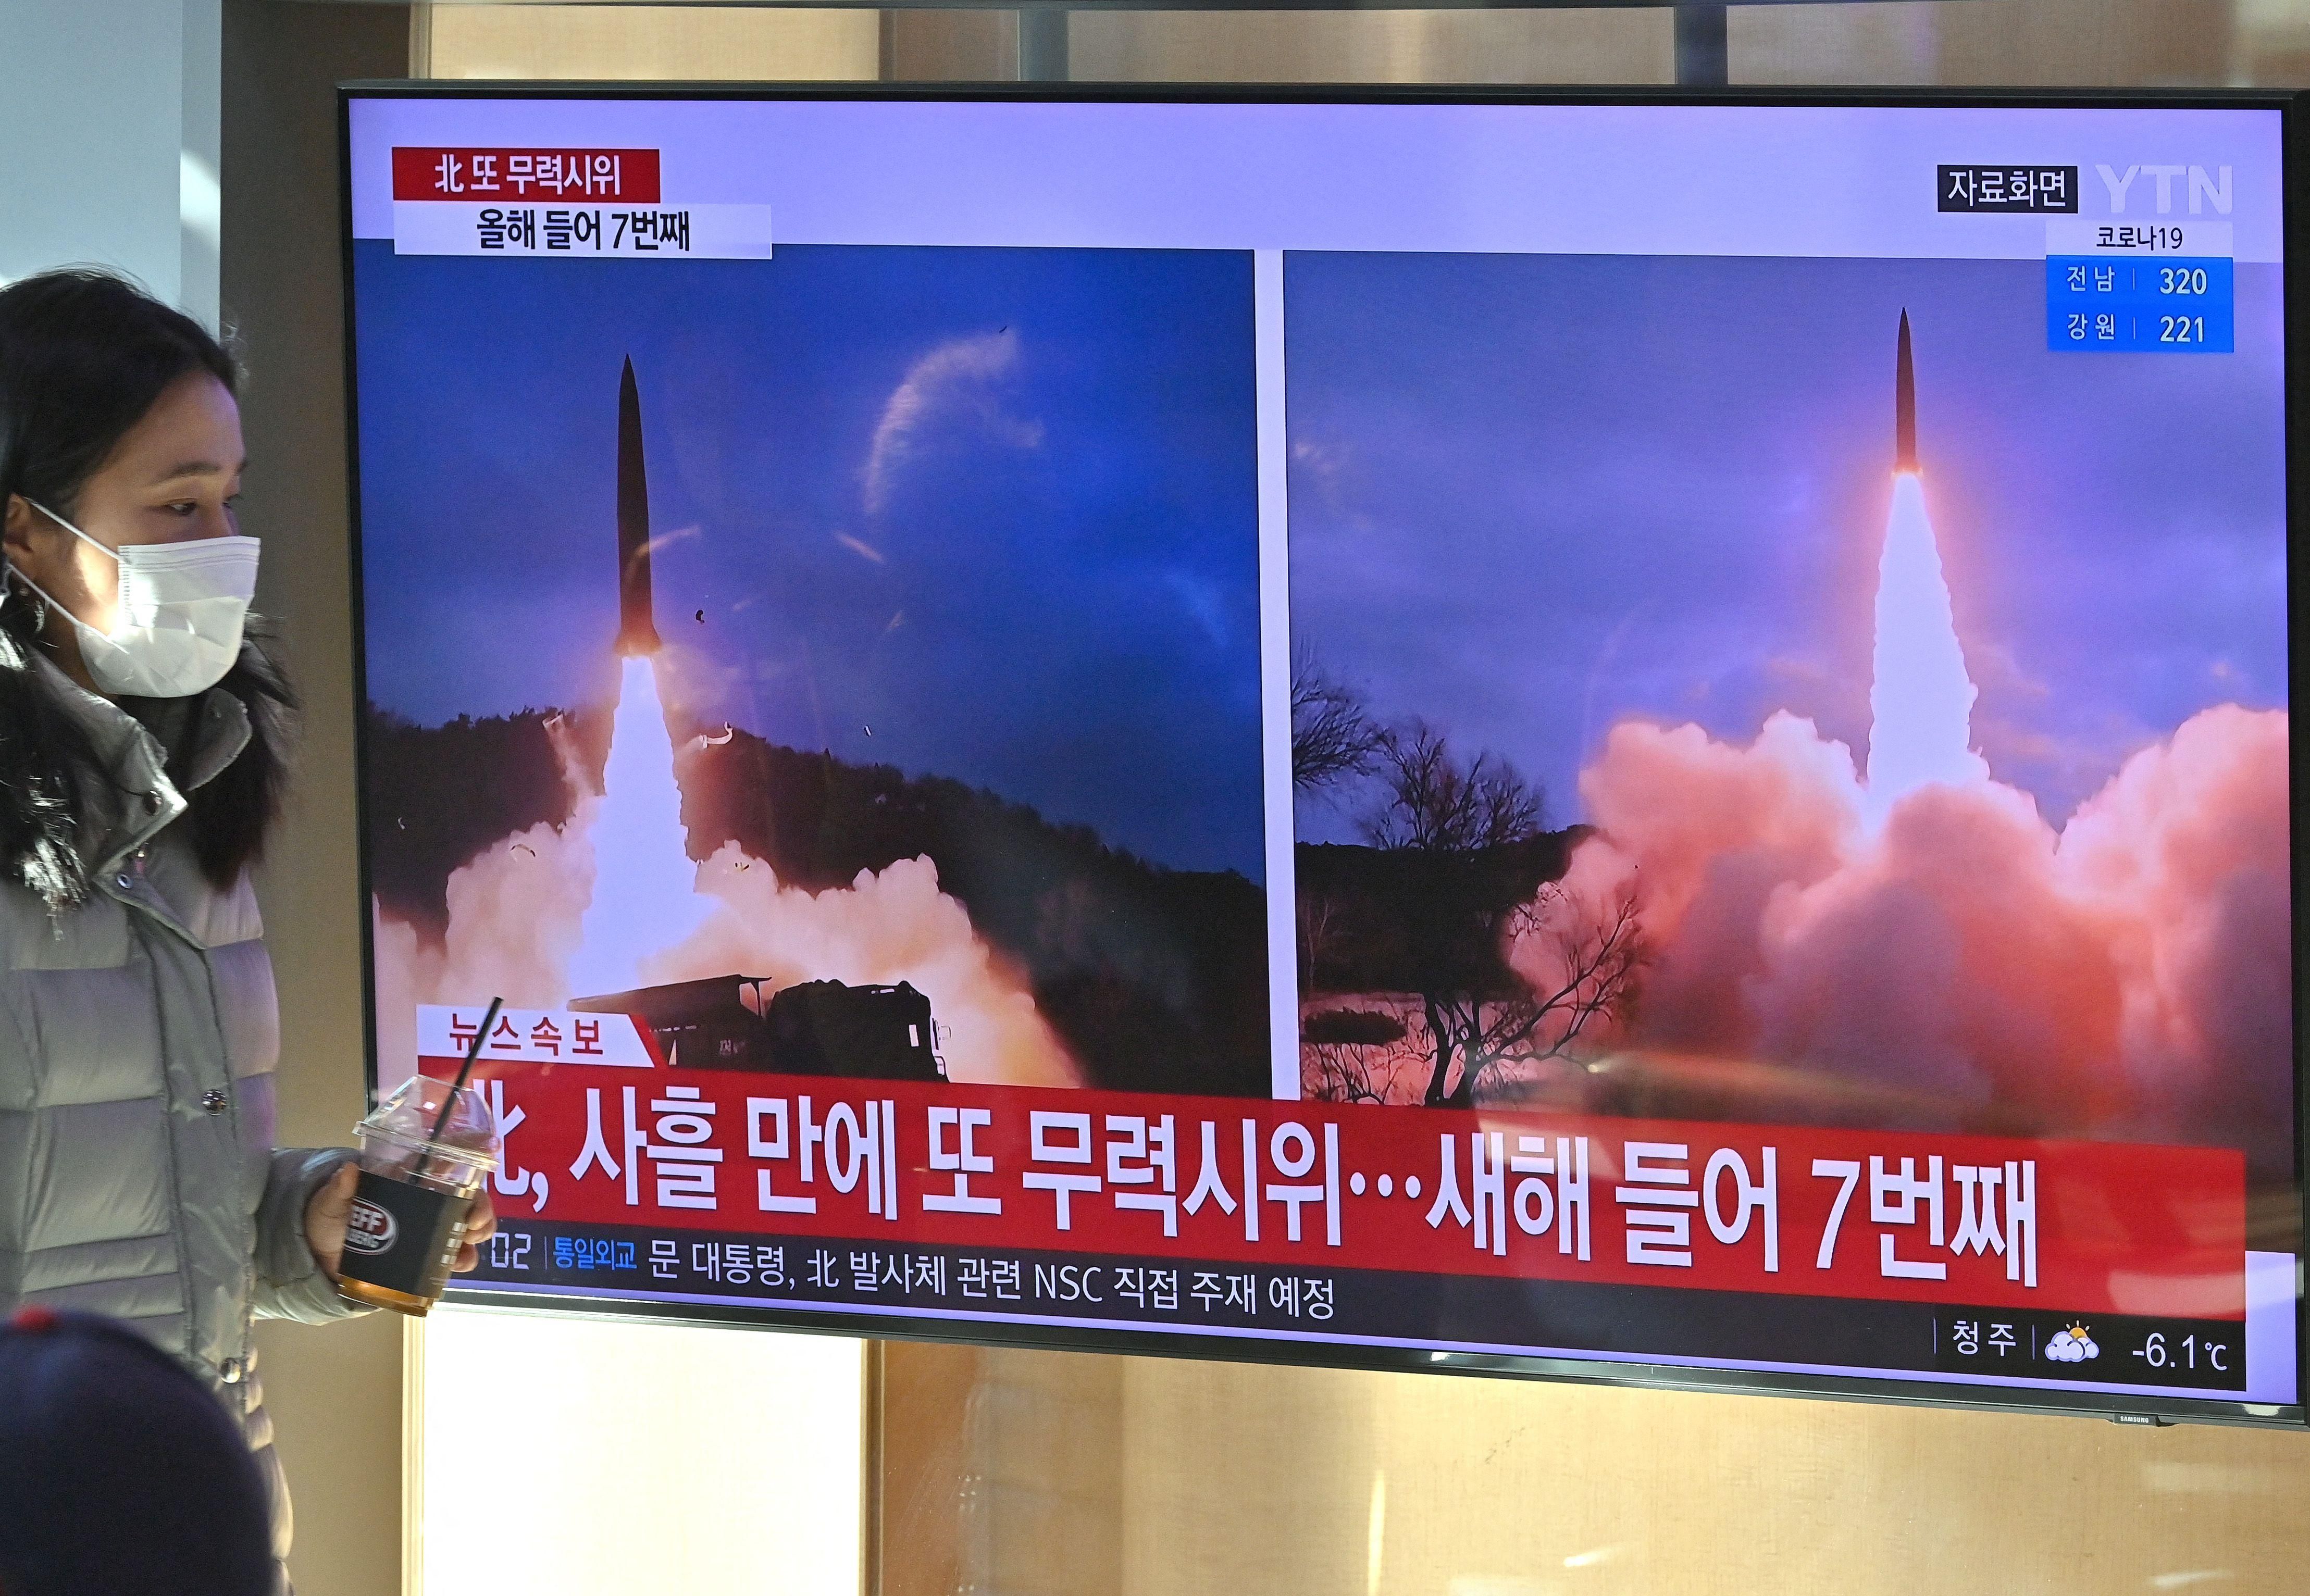 North Korean missile test on television